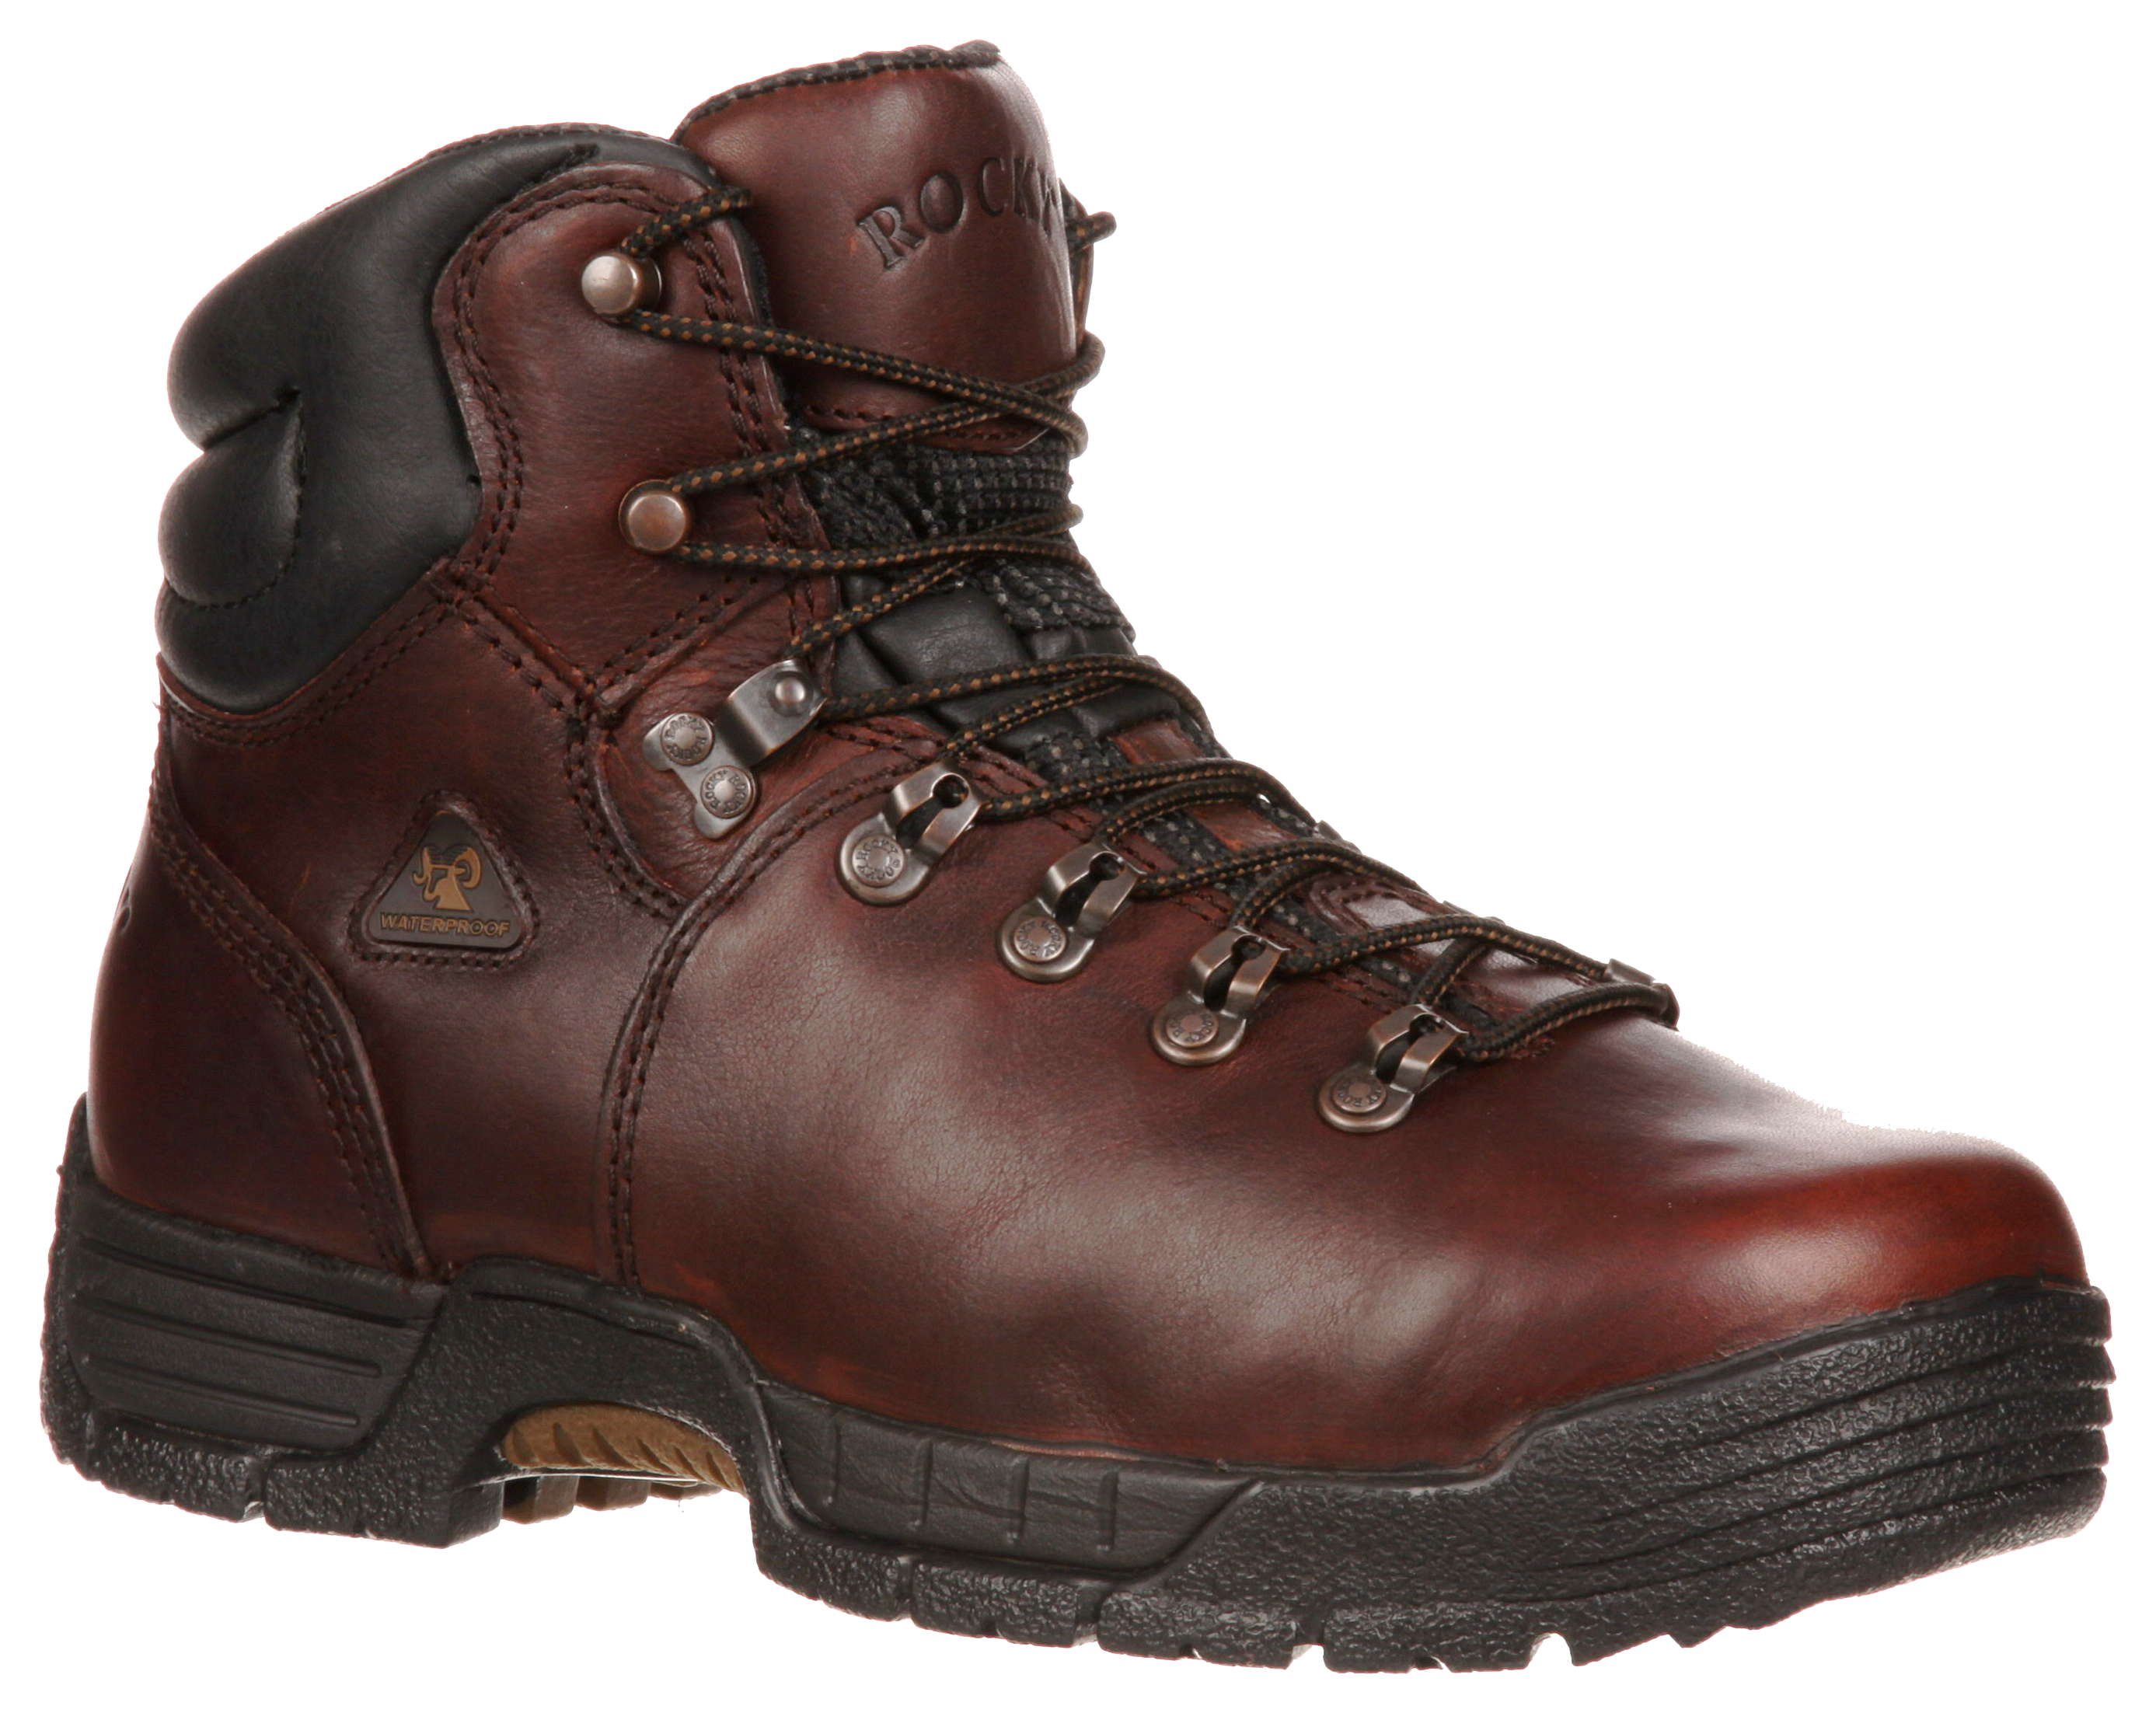 ROCKY MobiLite Waterproof Steel Toe Work Boots for Men - Brown - 9.5 M